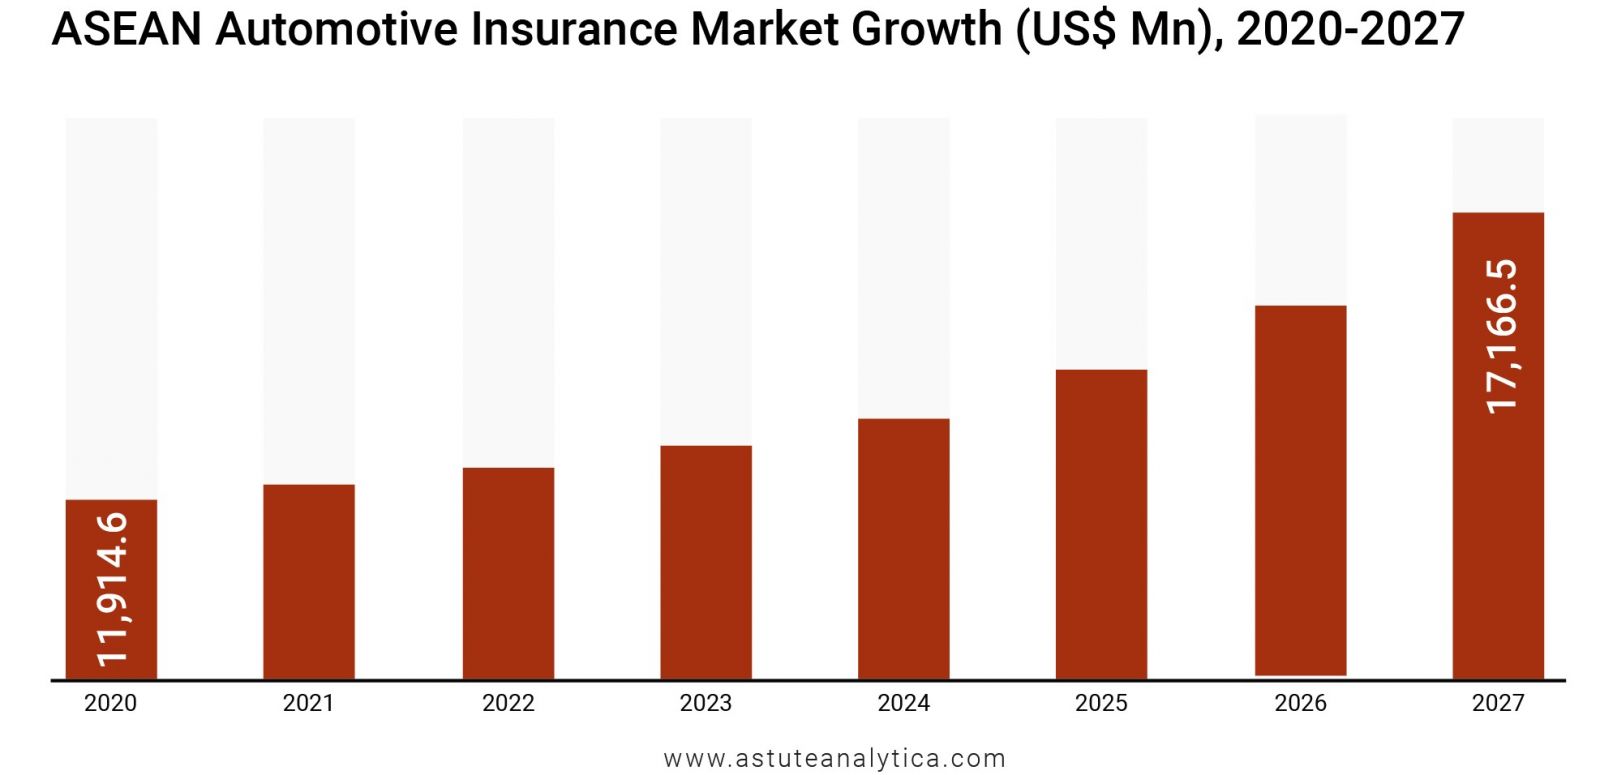 ASEAN automotive insurance market growth